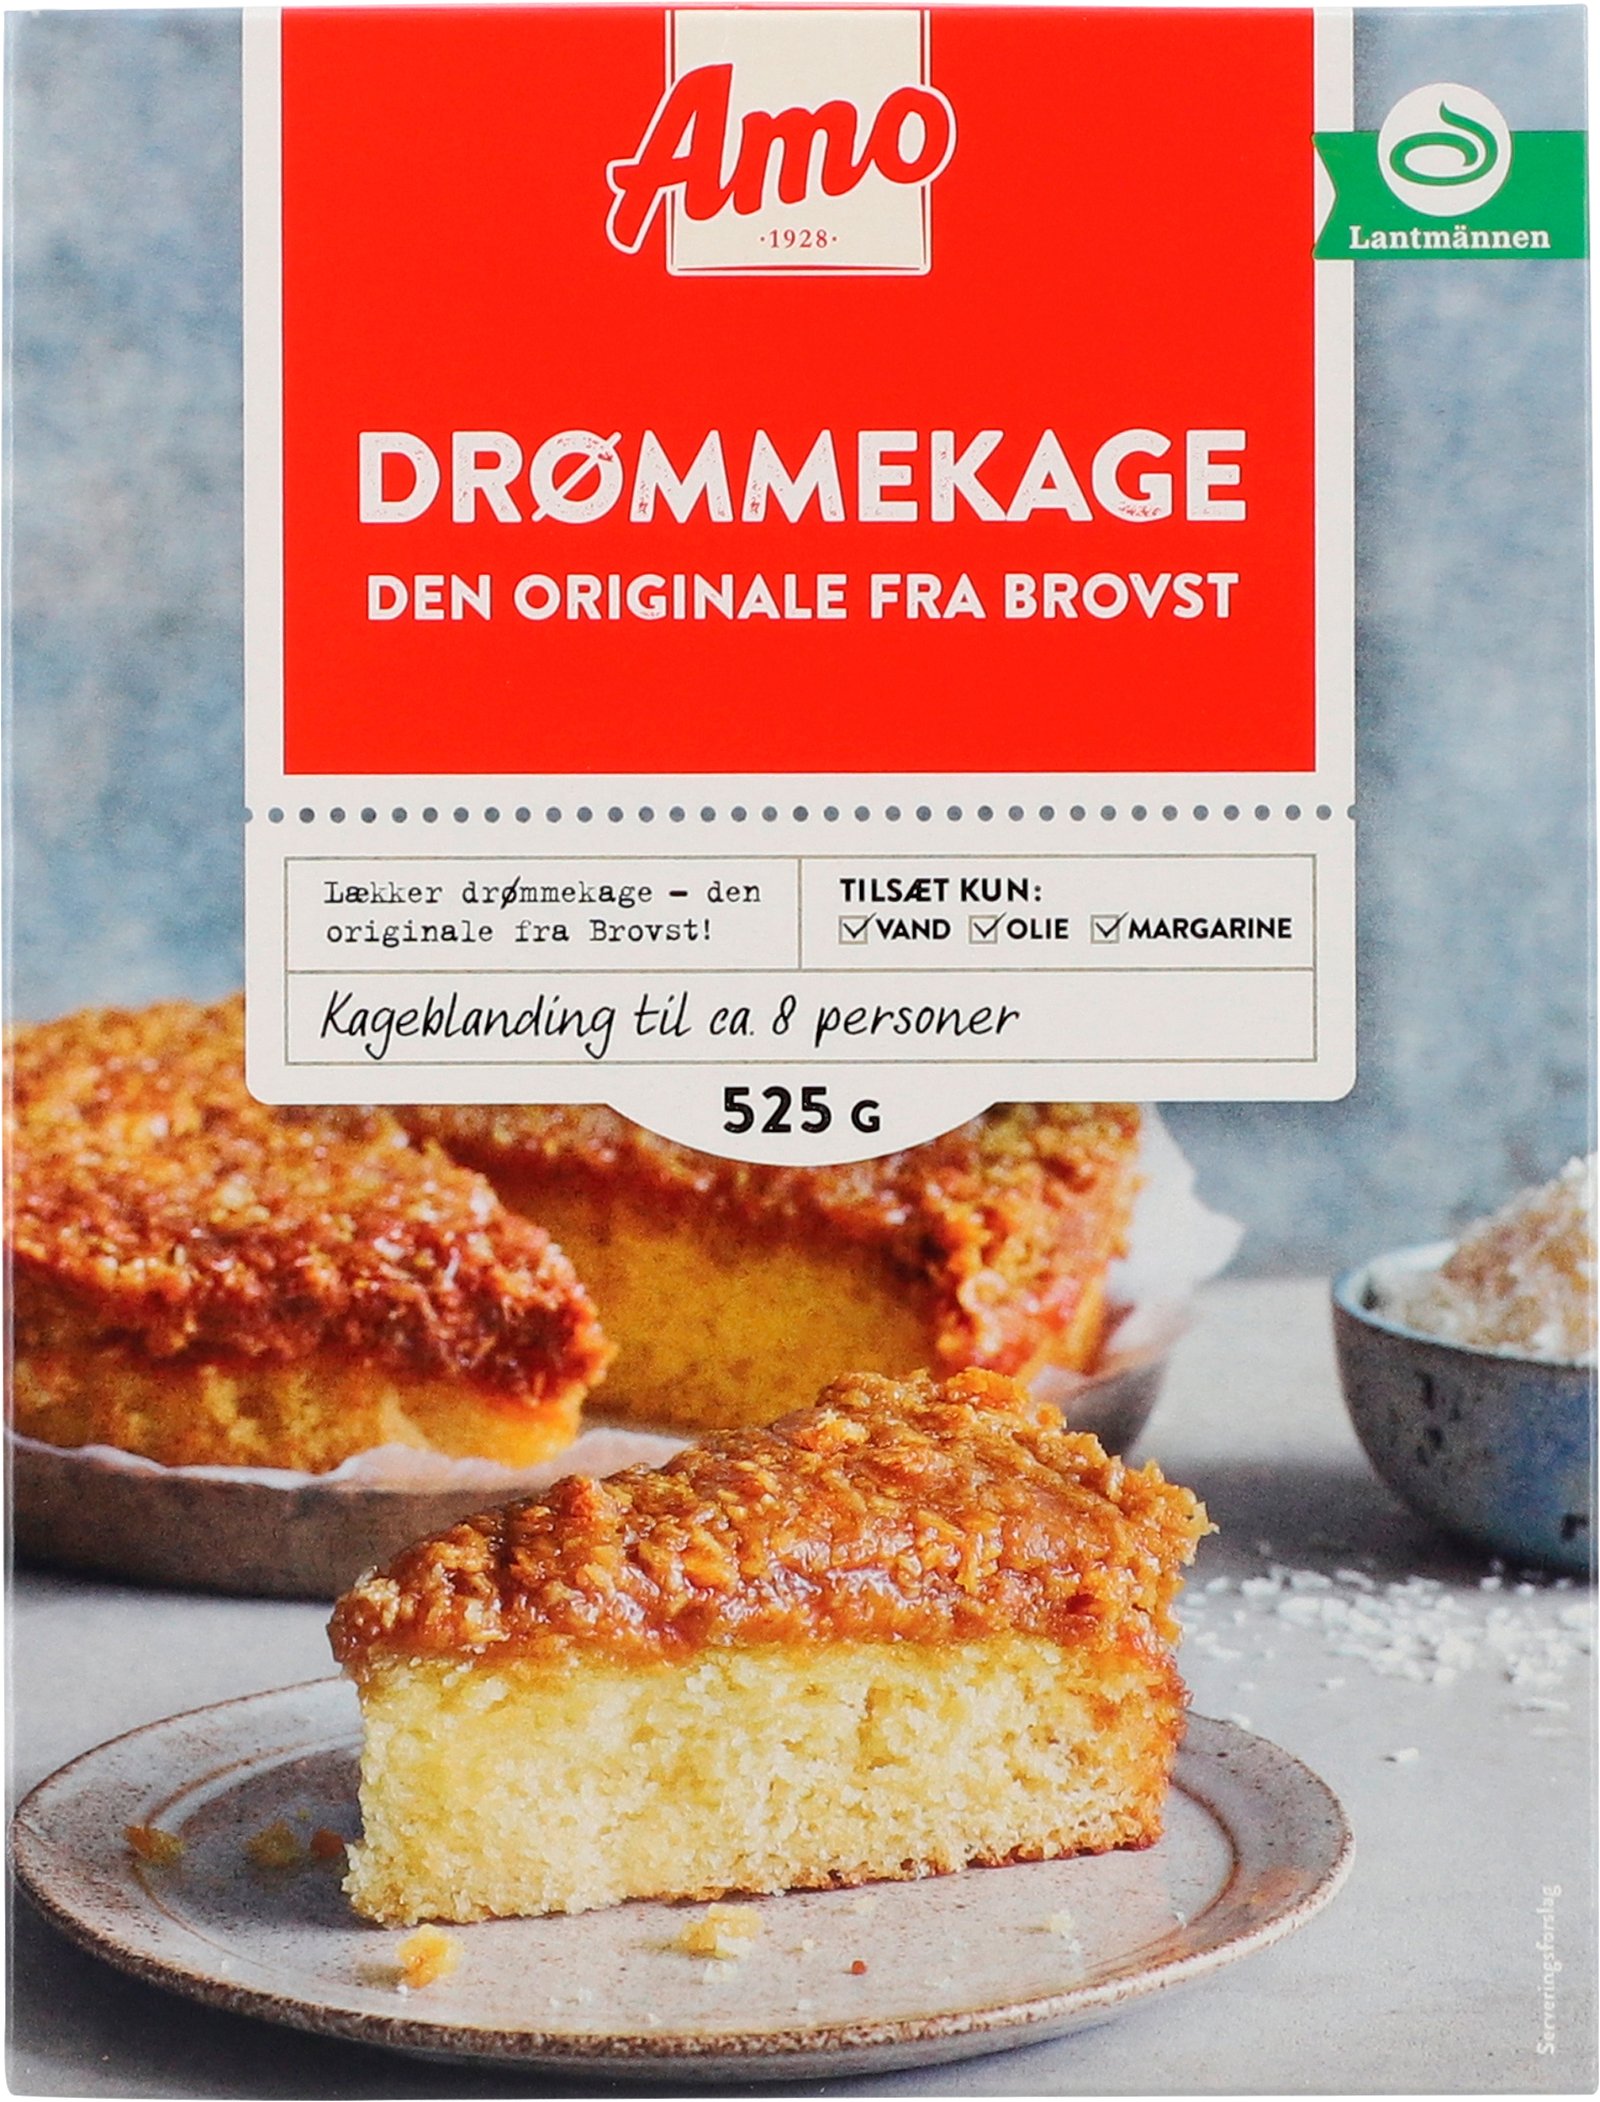 Amo Drømmekage from Brovst 525g